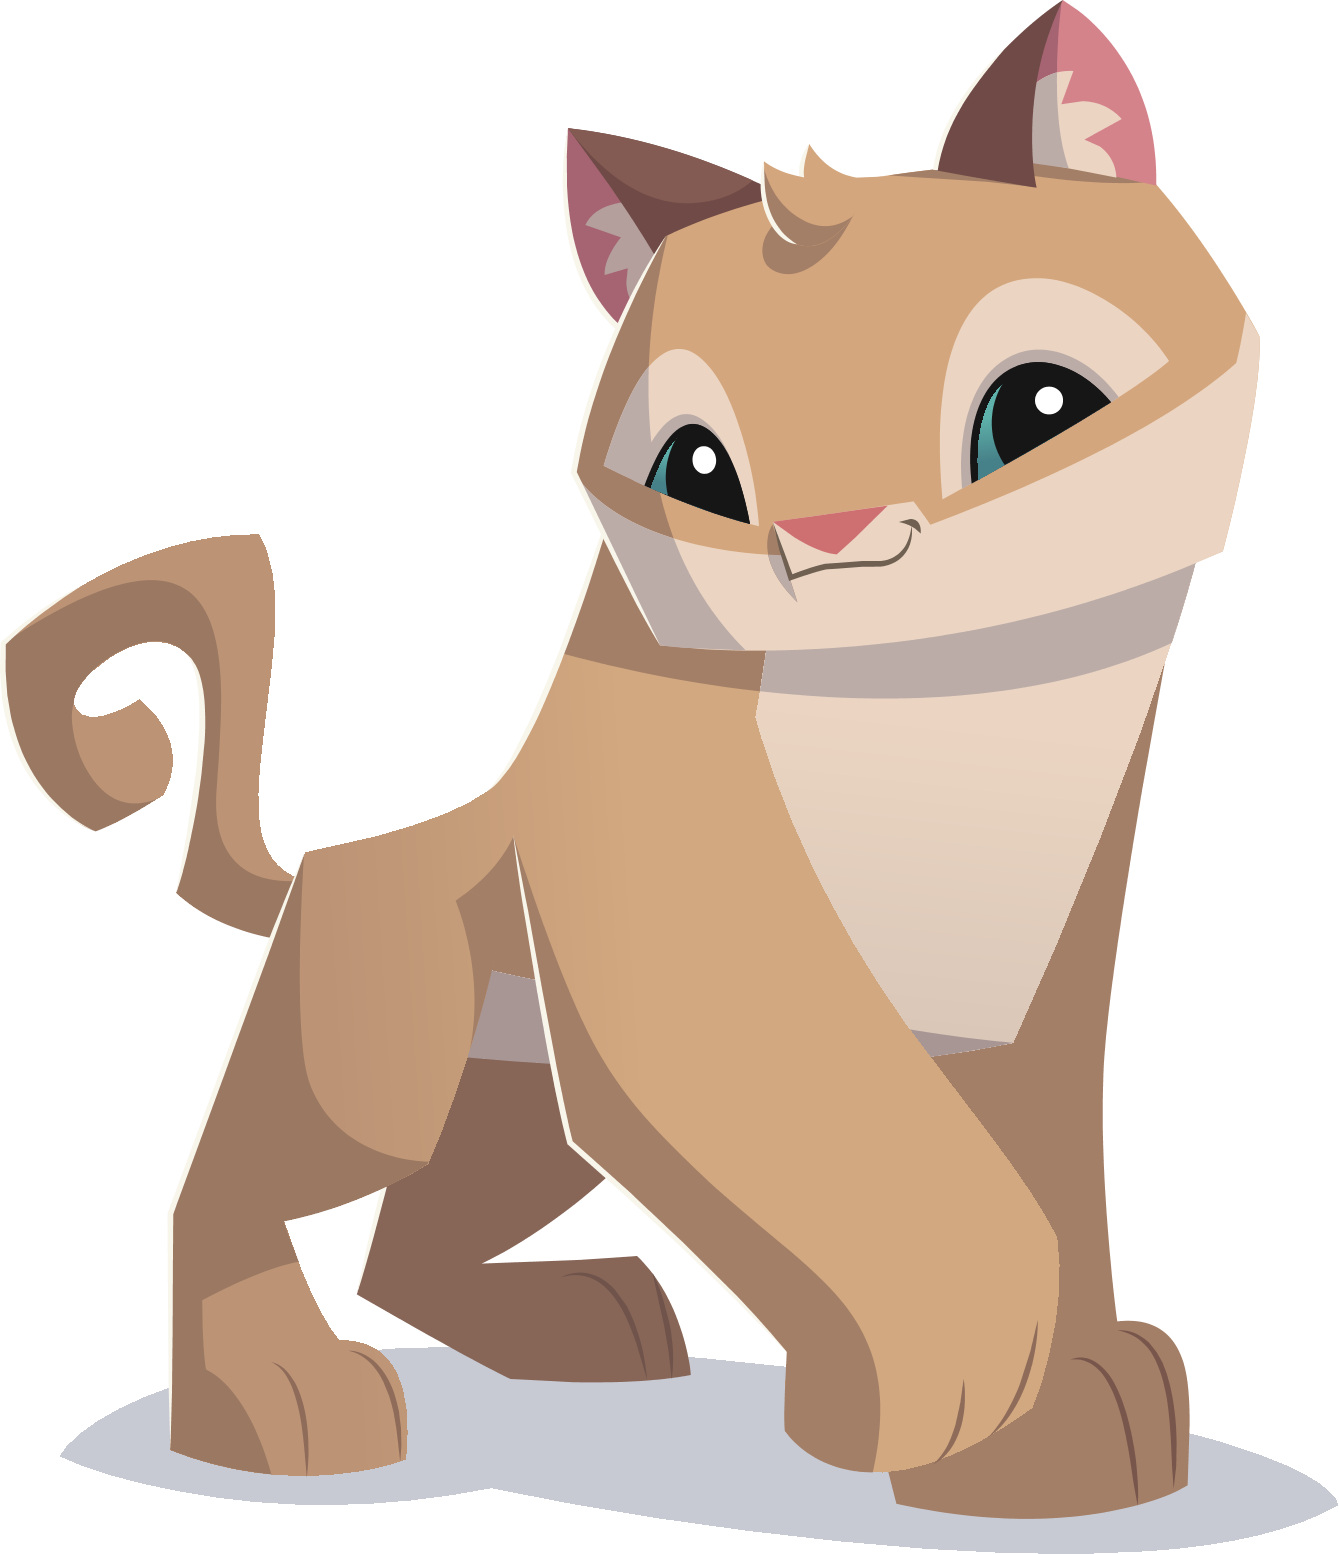 Animated Cougar Cub Illustration PNG image